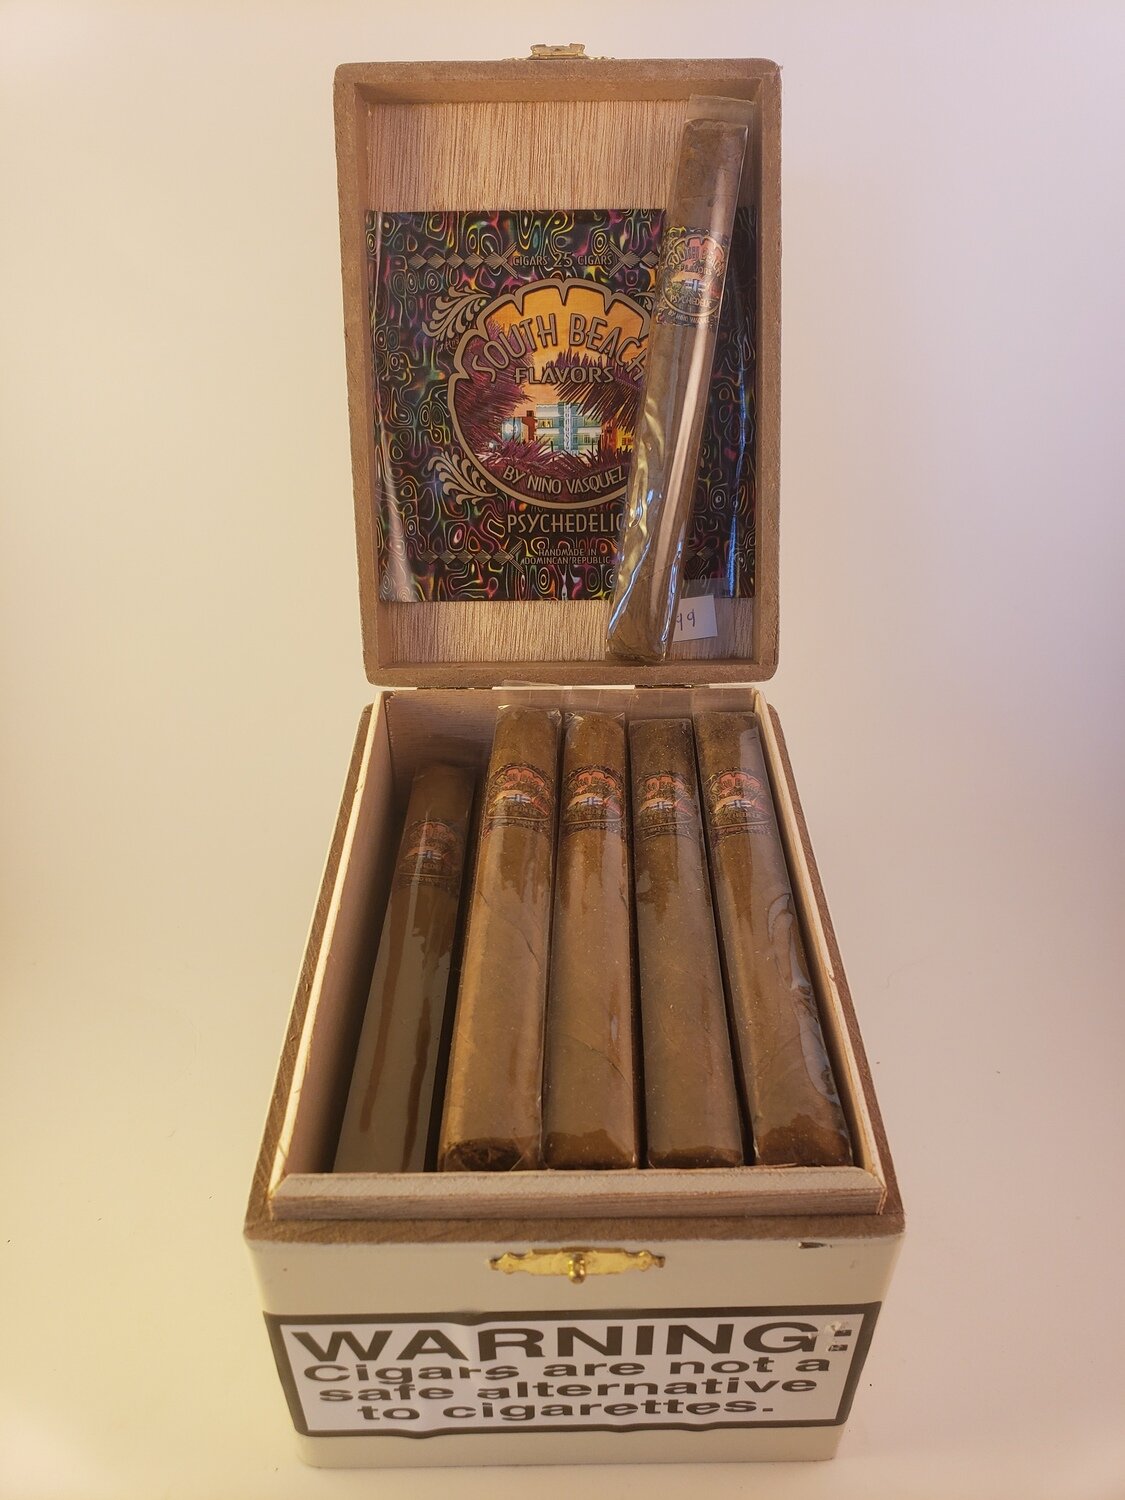 South Beach Flavors STRAWBERRY 5 x 42 Single Cigar